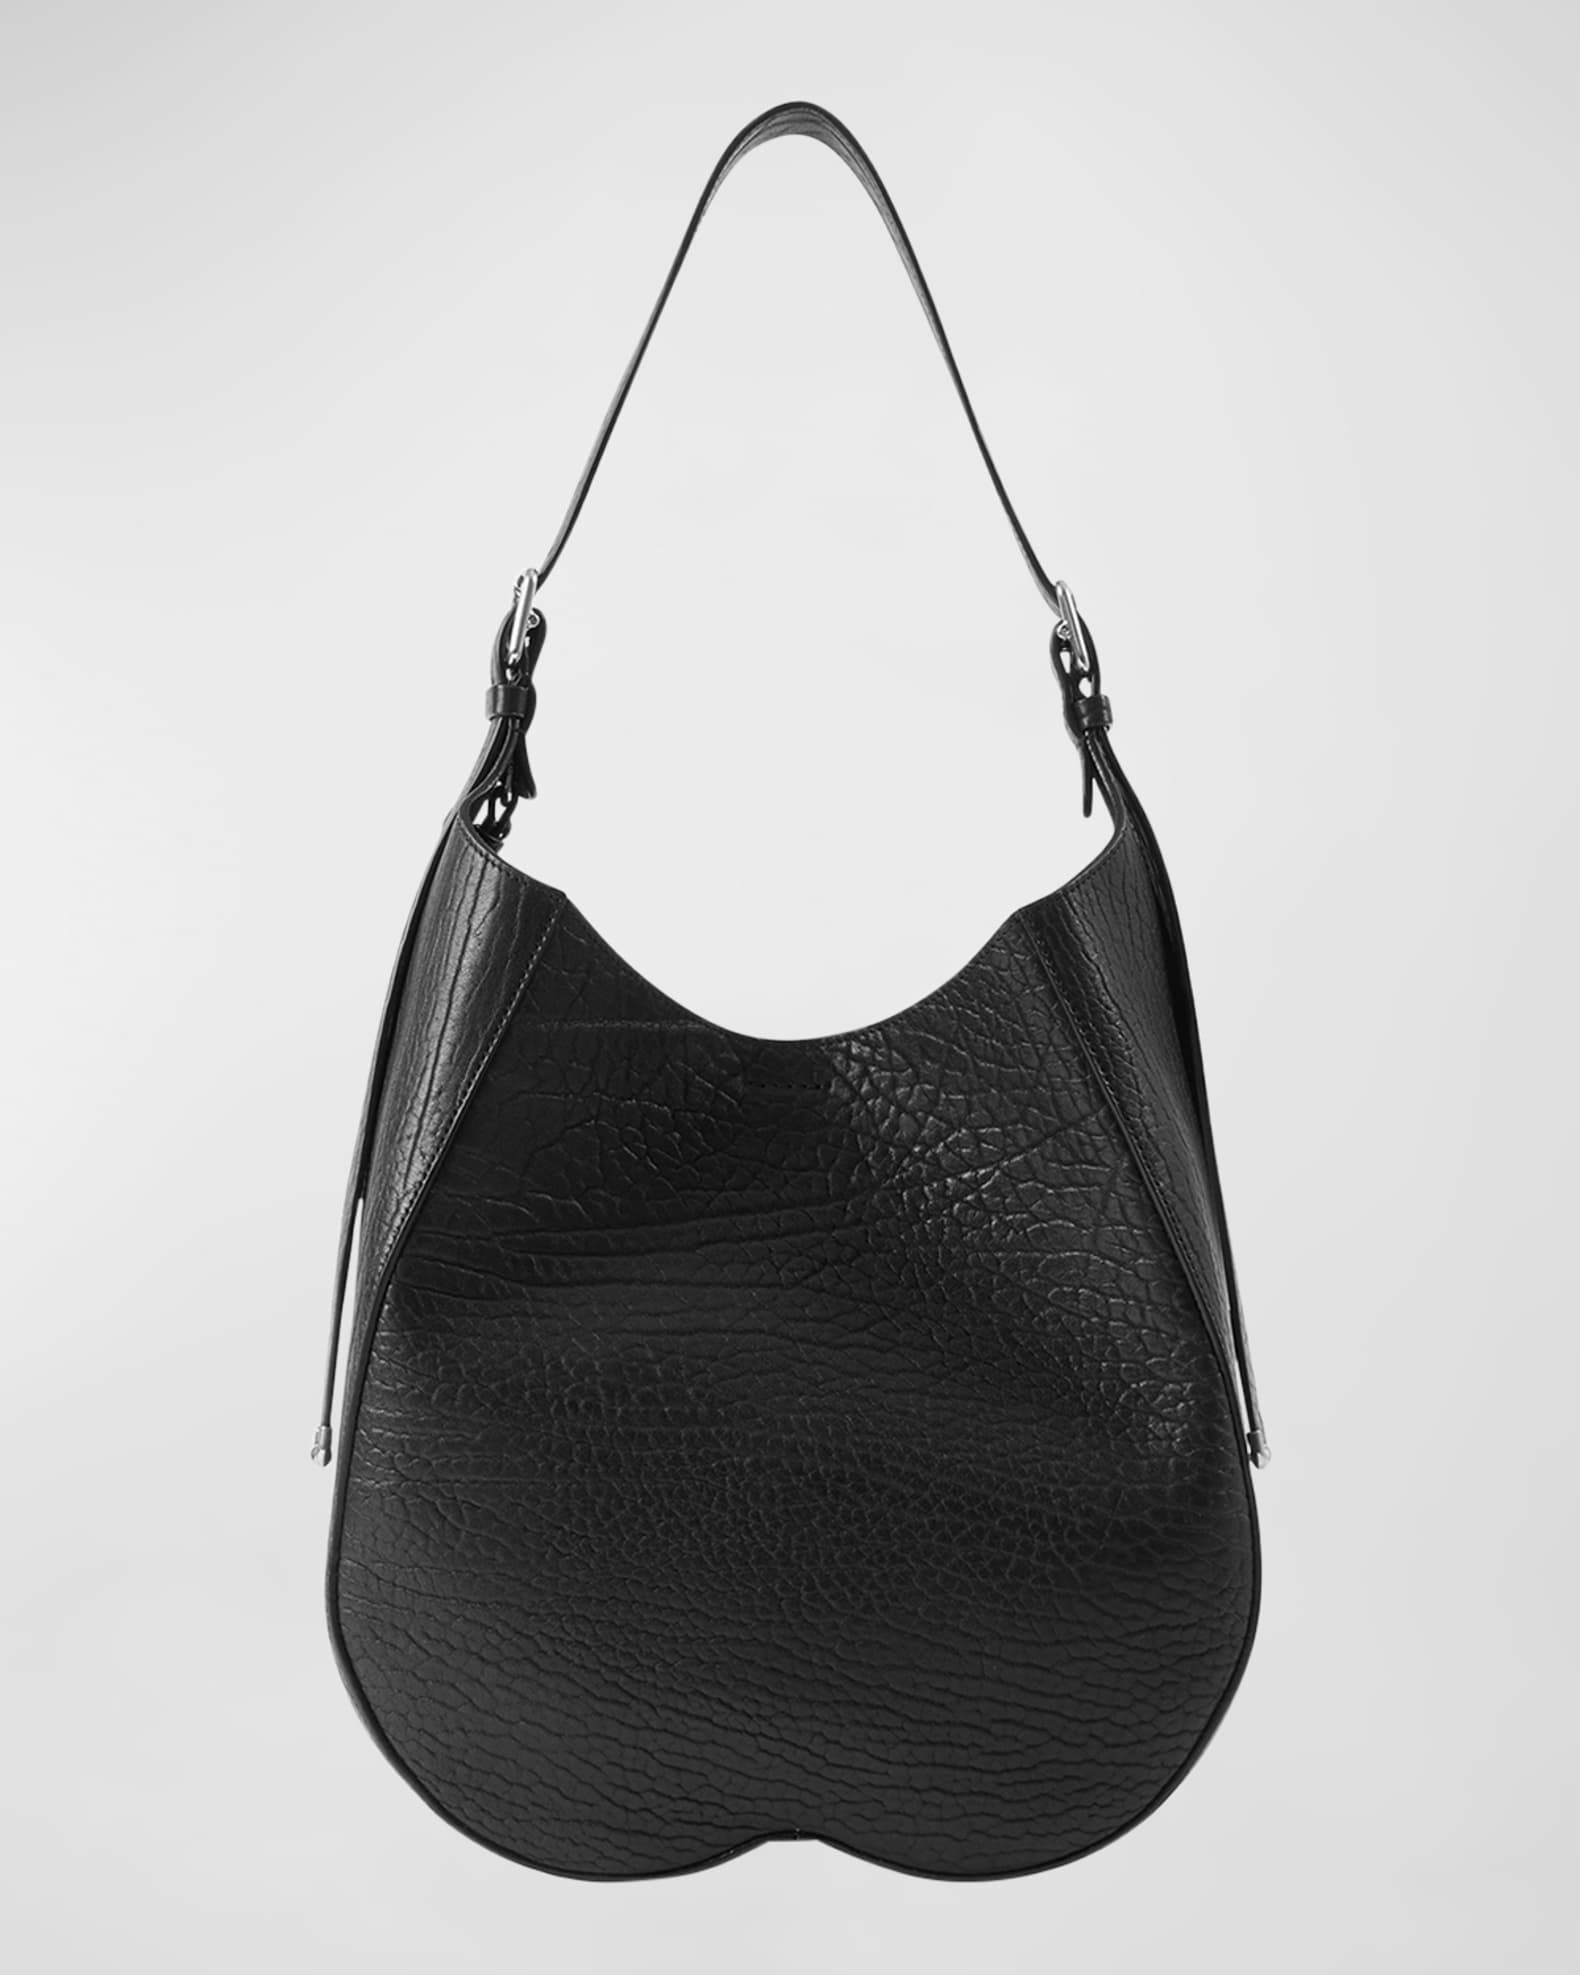 Chanel Small Mixed Chain-Link Hobo - Black Hobos, Handbags